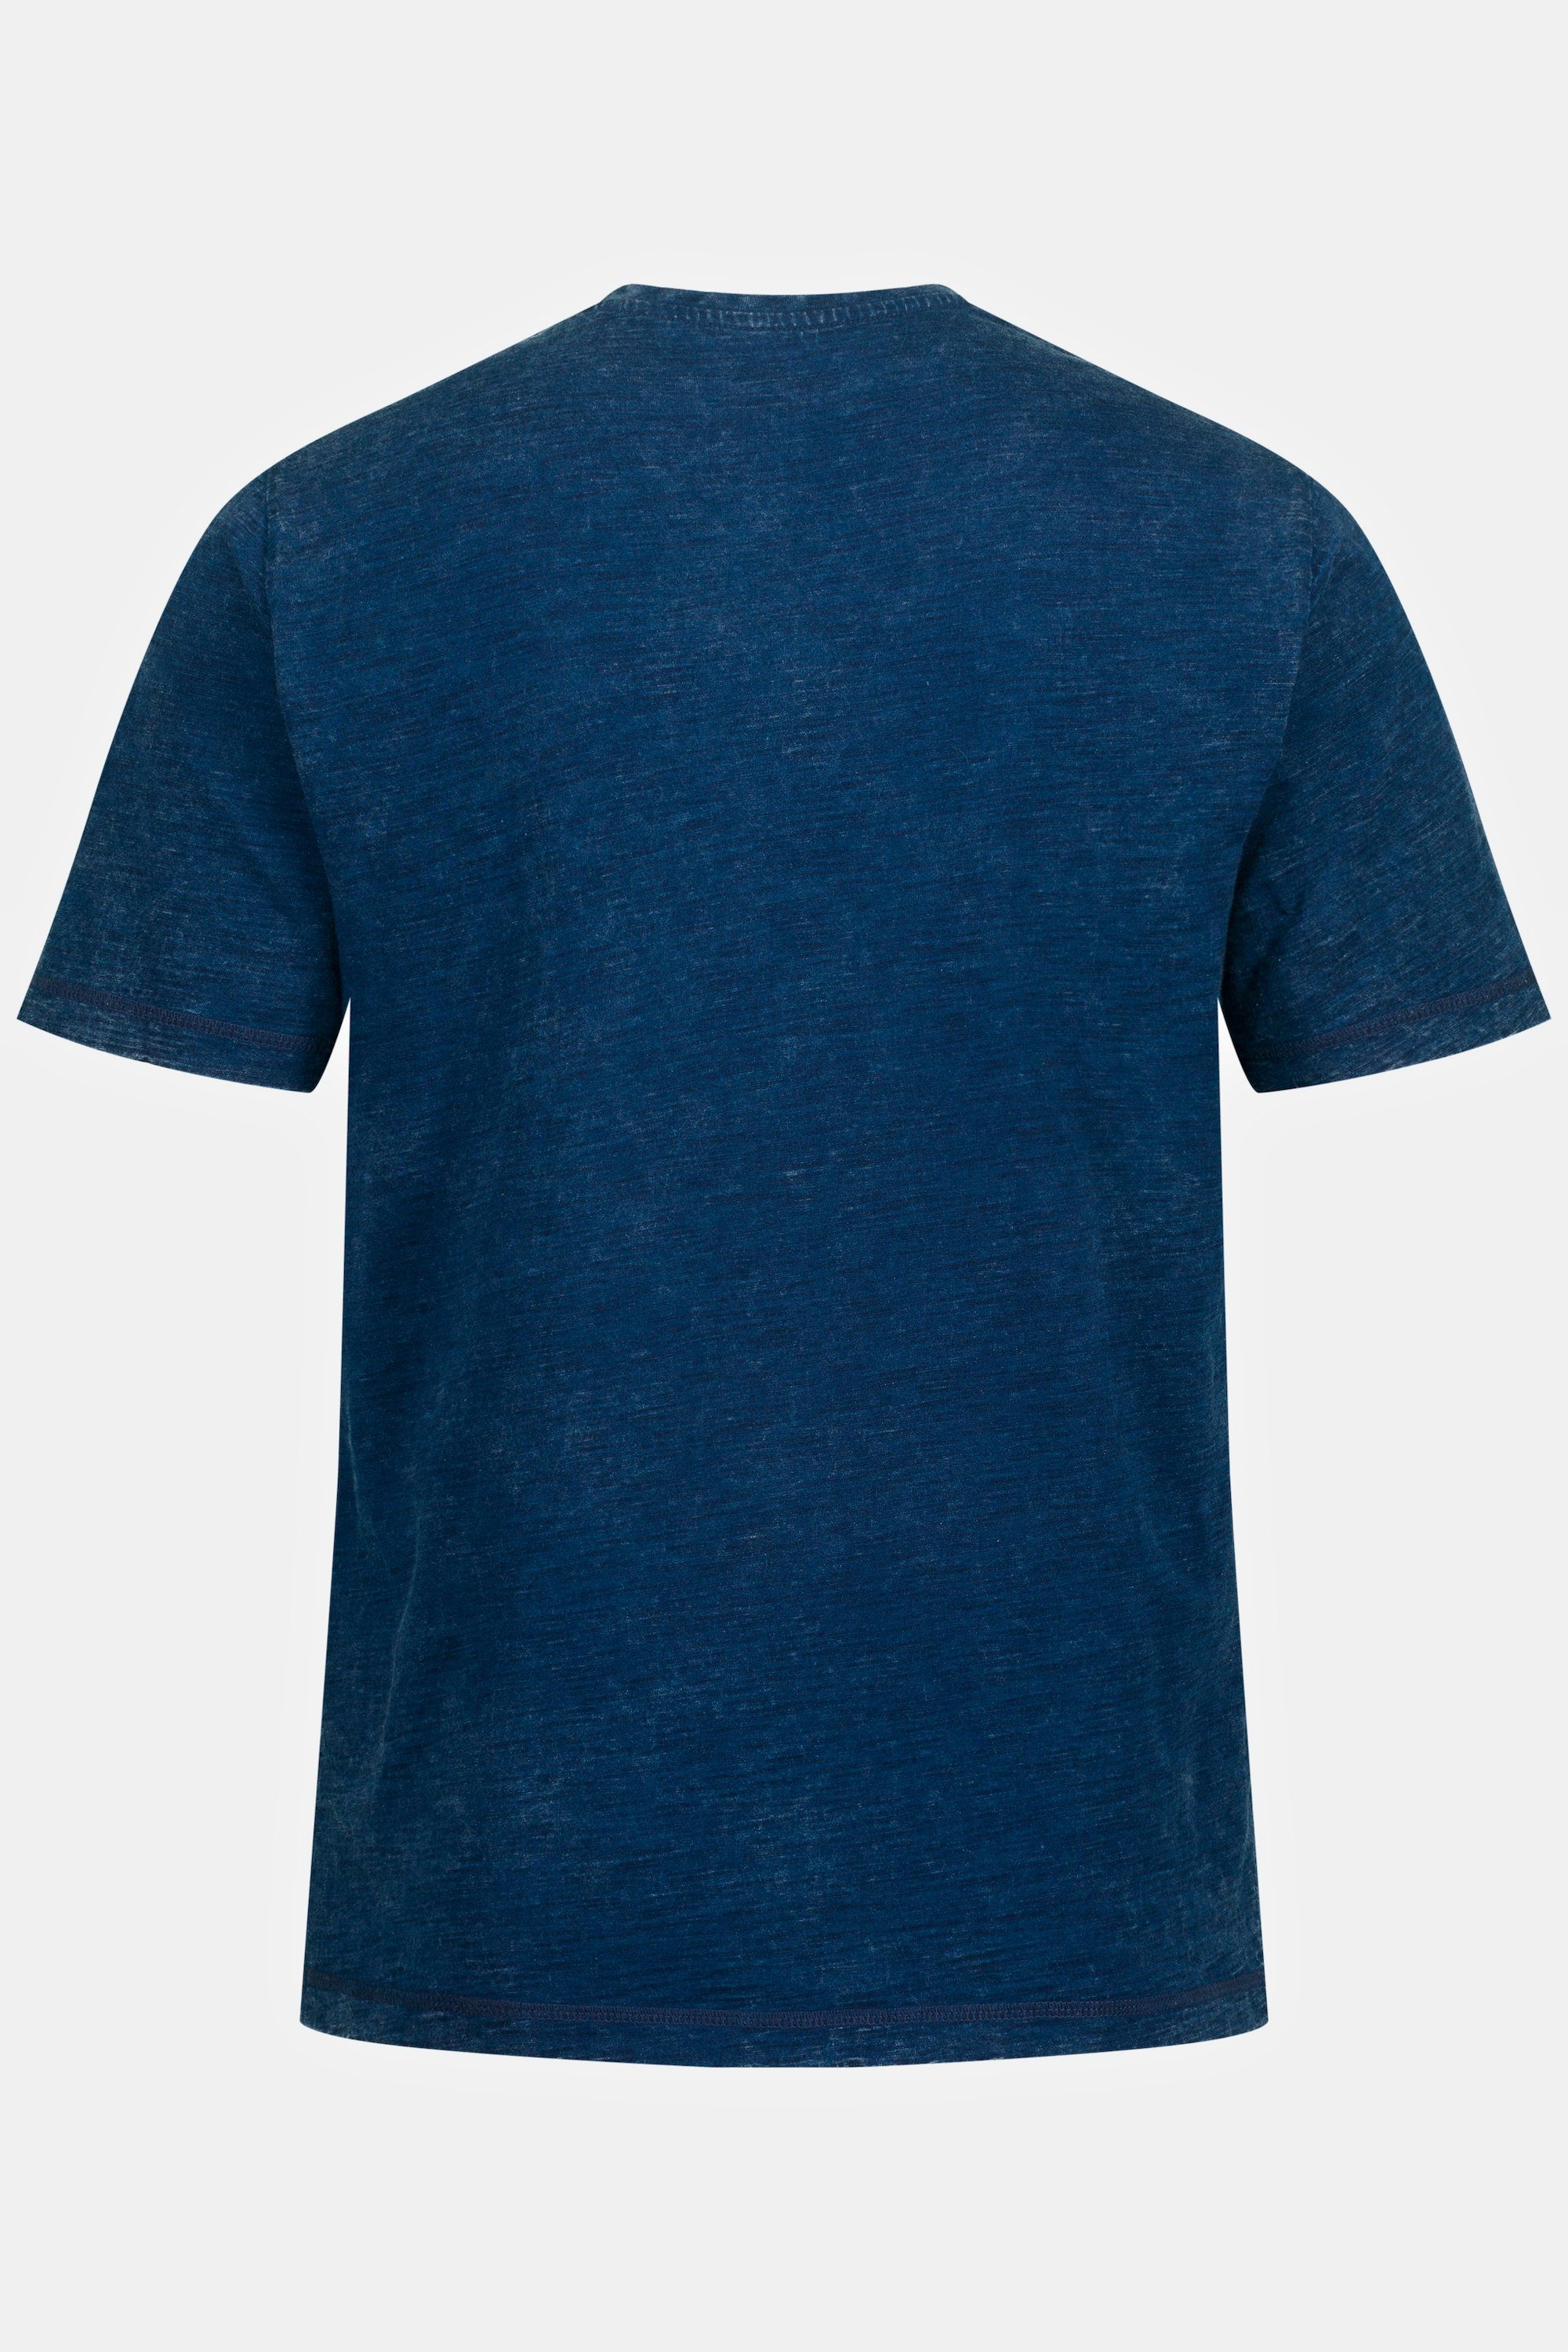 JP1880 Halbarm T-Shirt Indigo-Färbung Print Rundhals T-Shirt